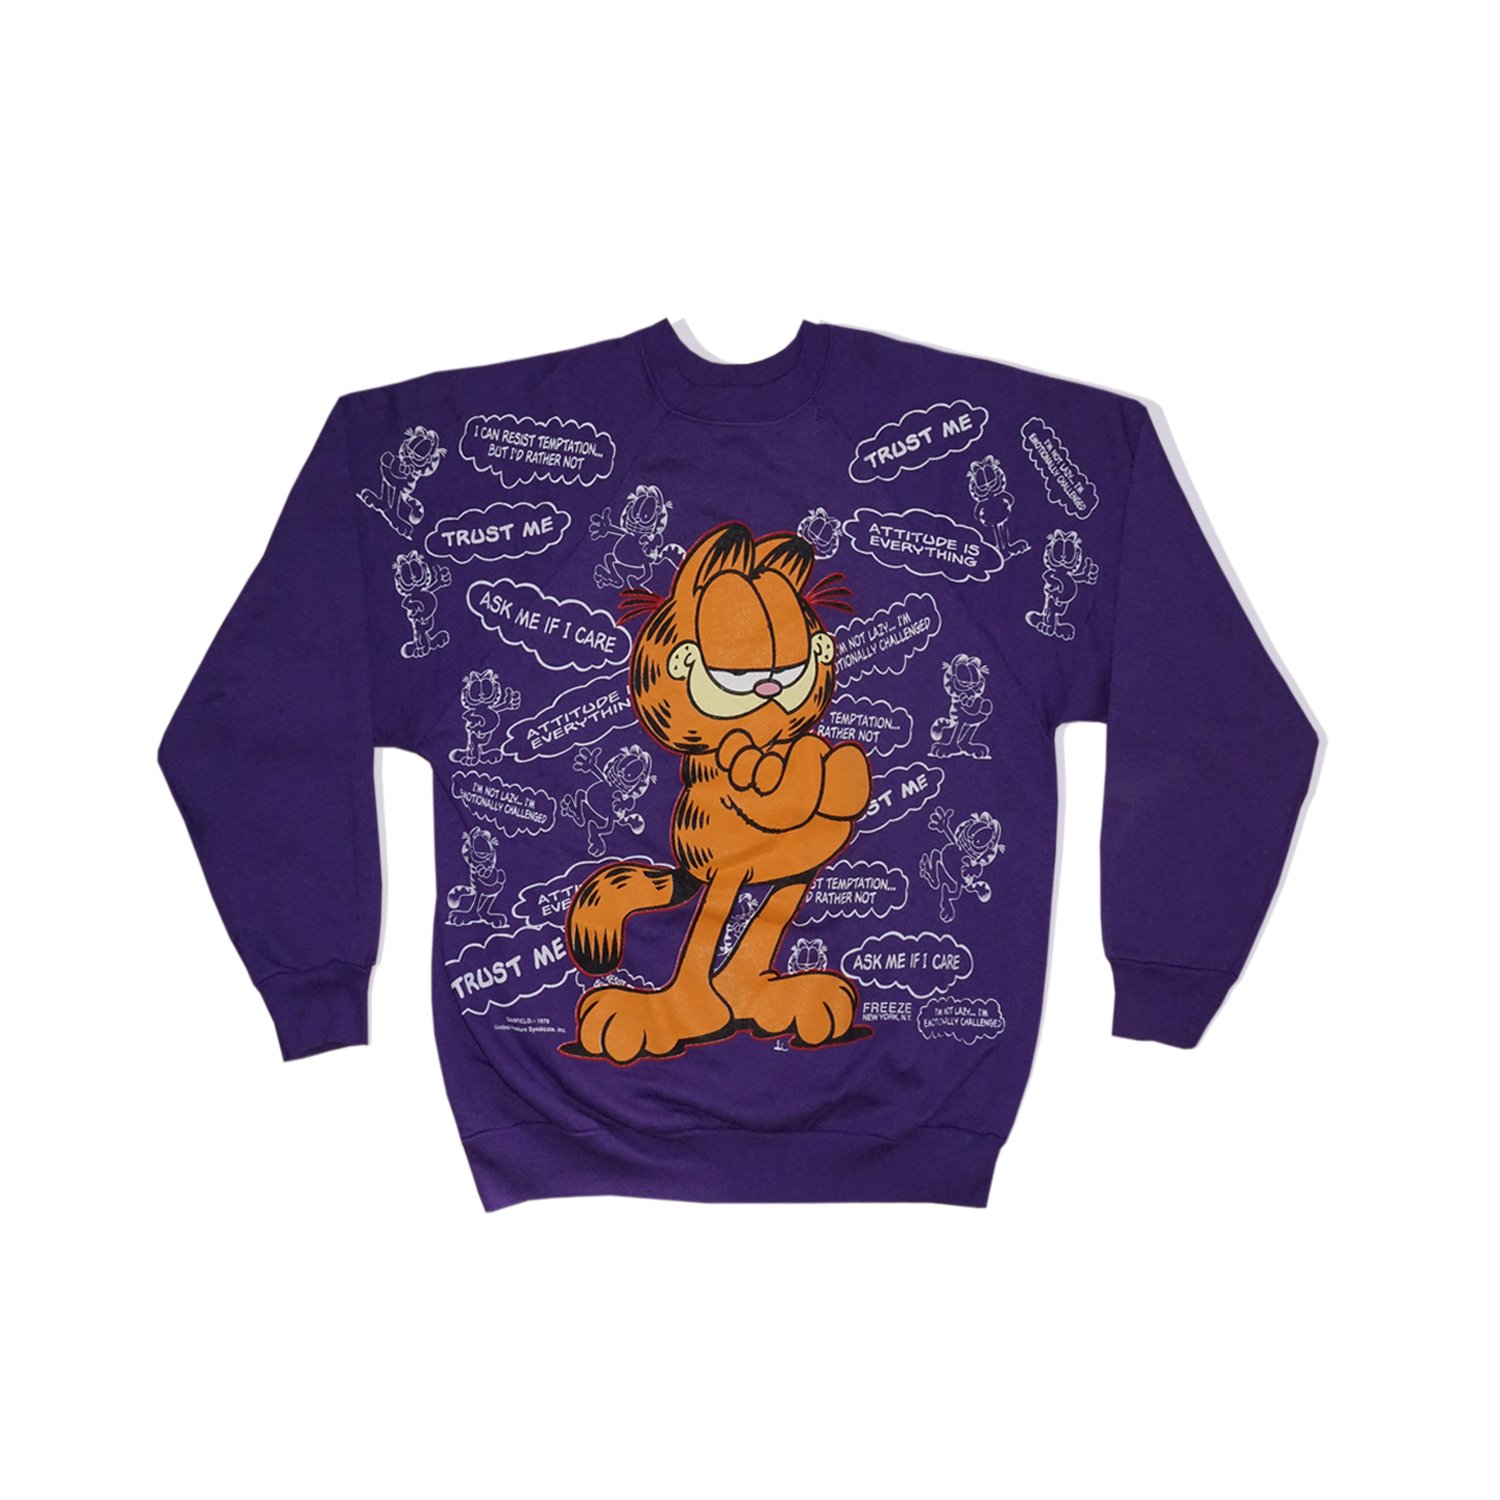 1990s Garfield The Cat Vintage Crewneck